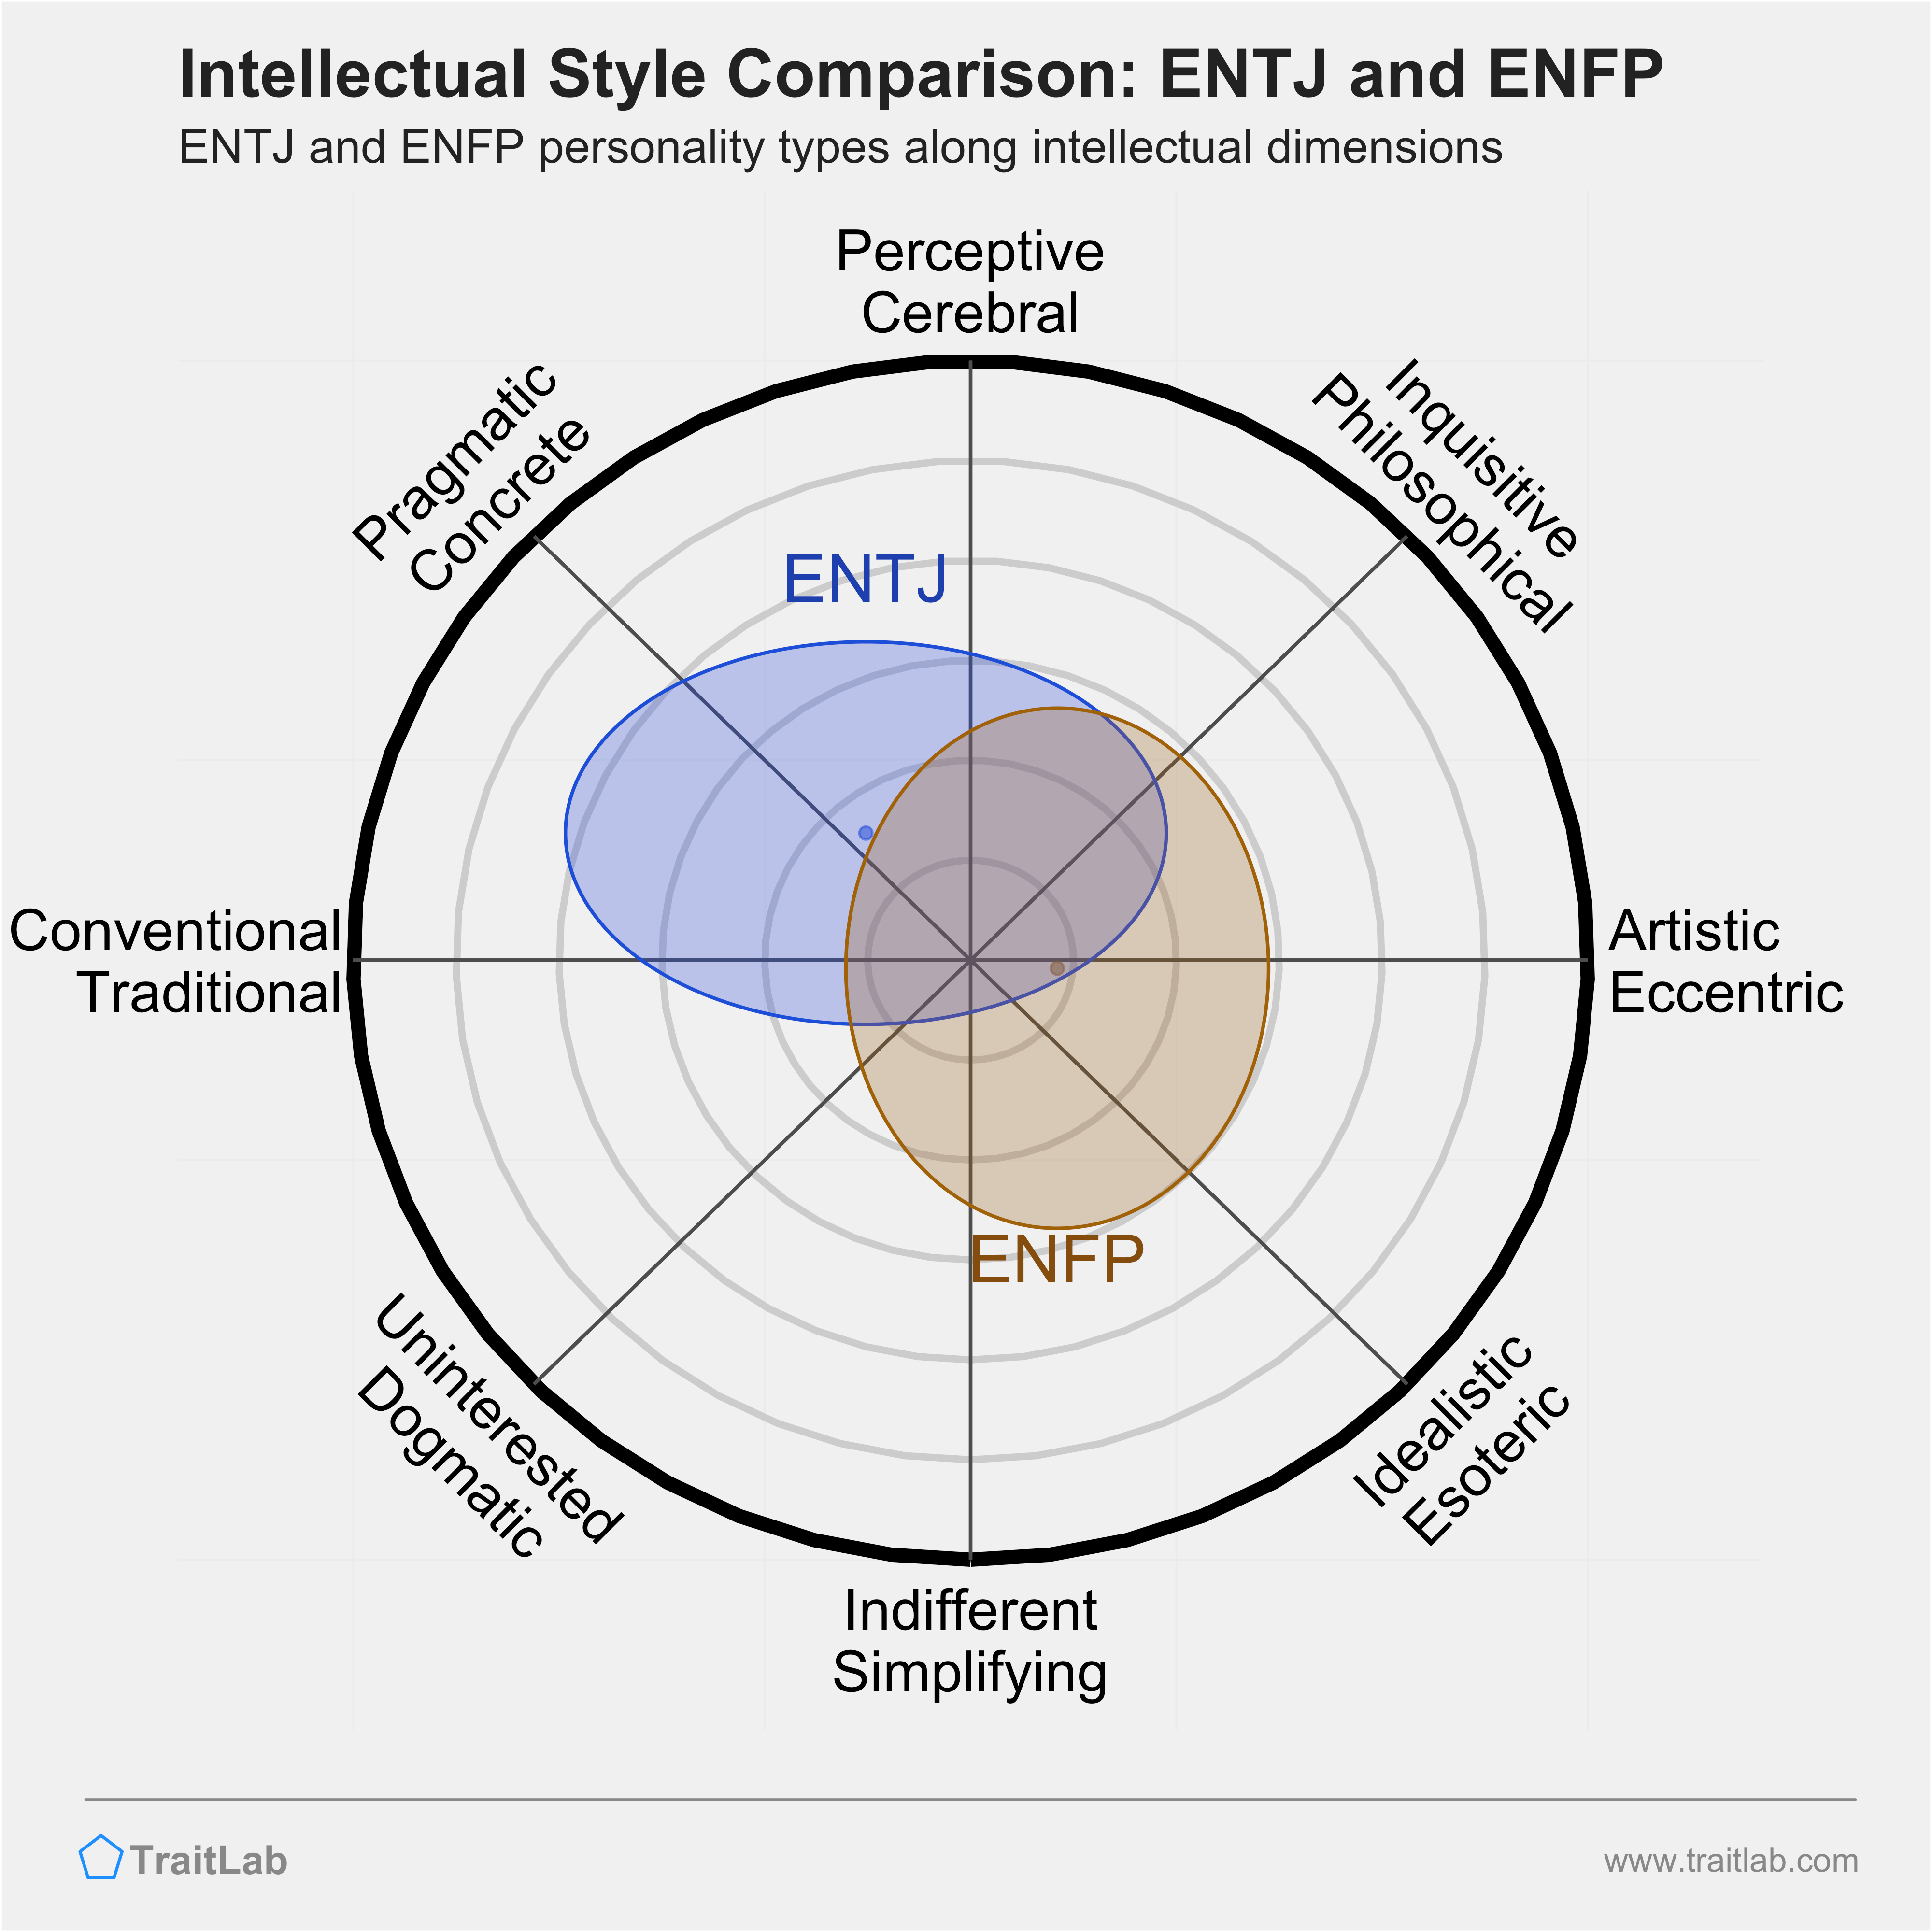 ENTJ and ENFP comparison across intellectual dimensions